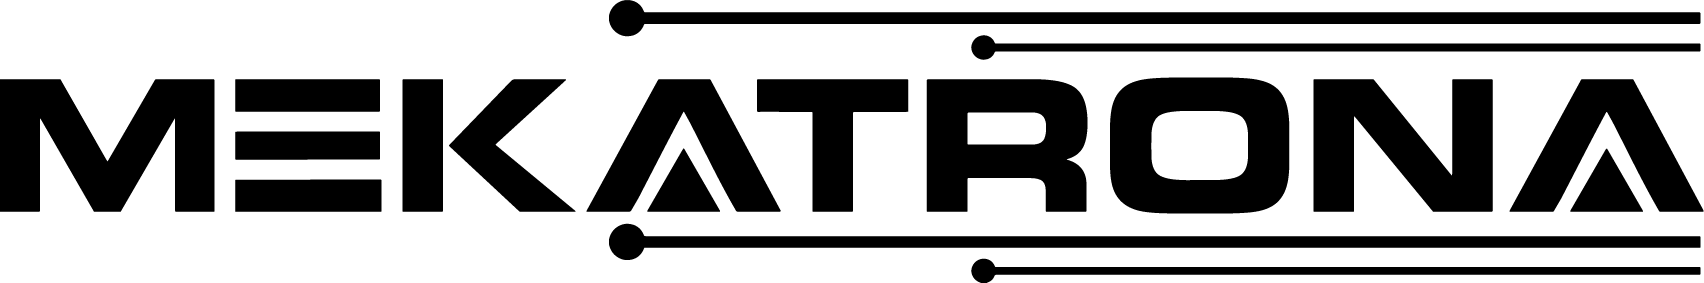 Mekatronas logotyp